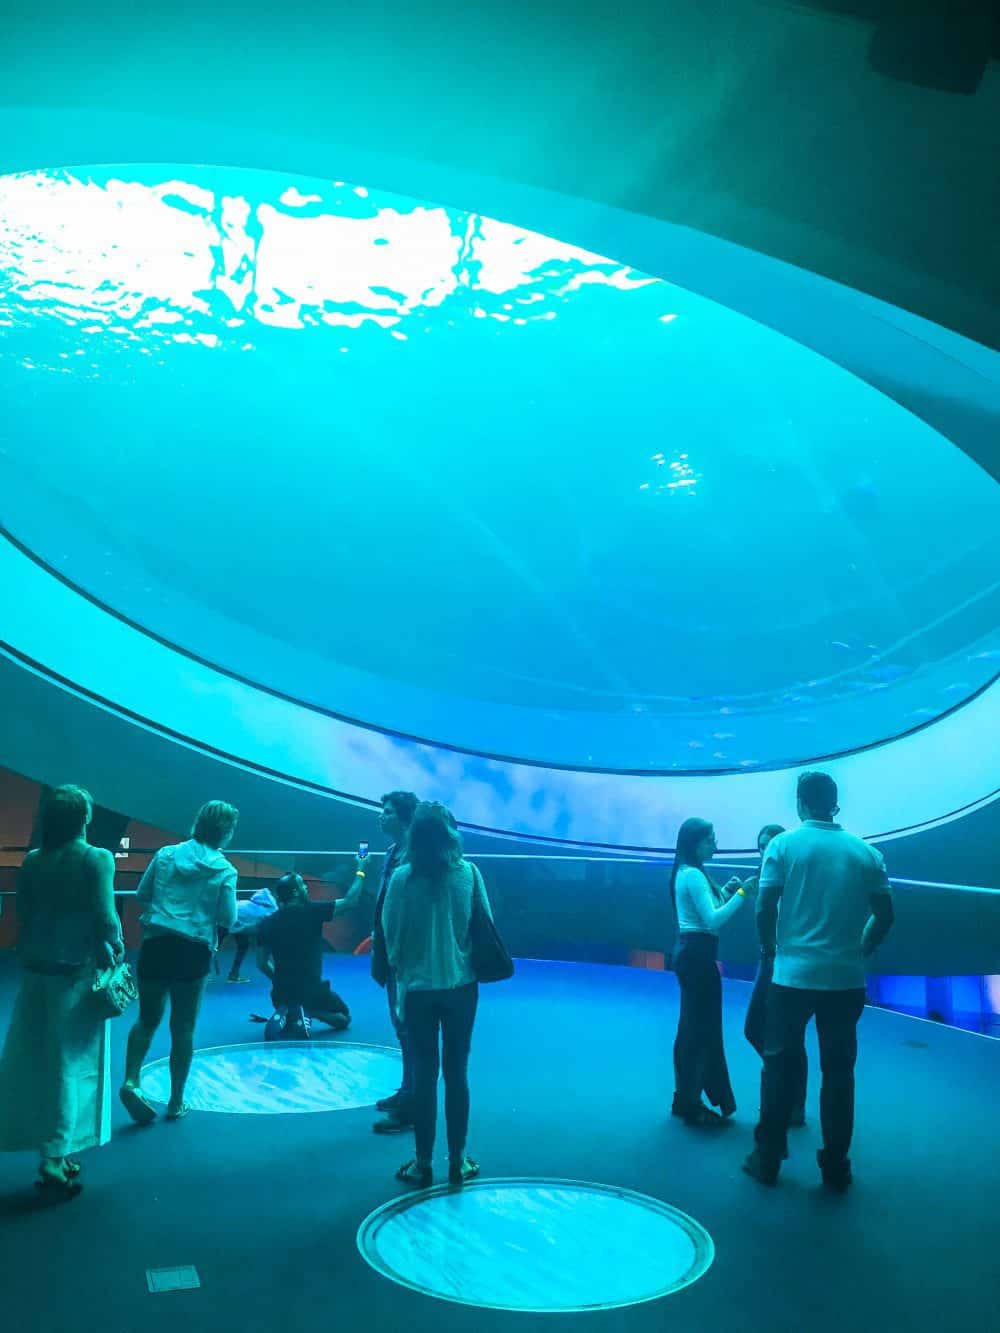 The Aquarium at the Frost Science Museum